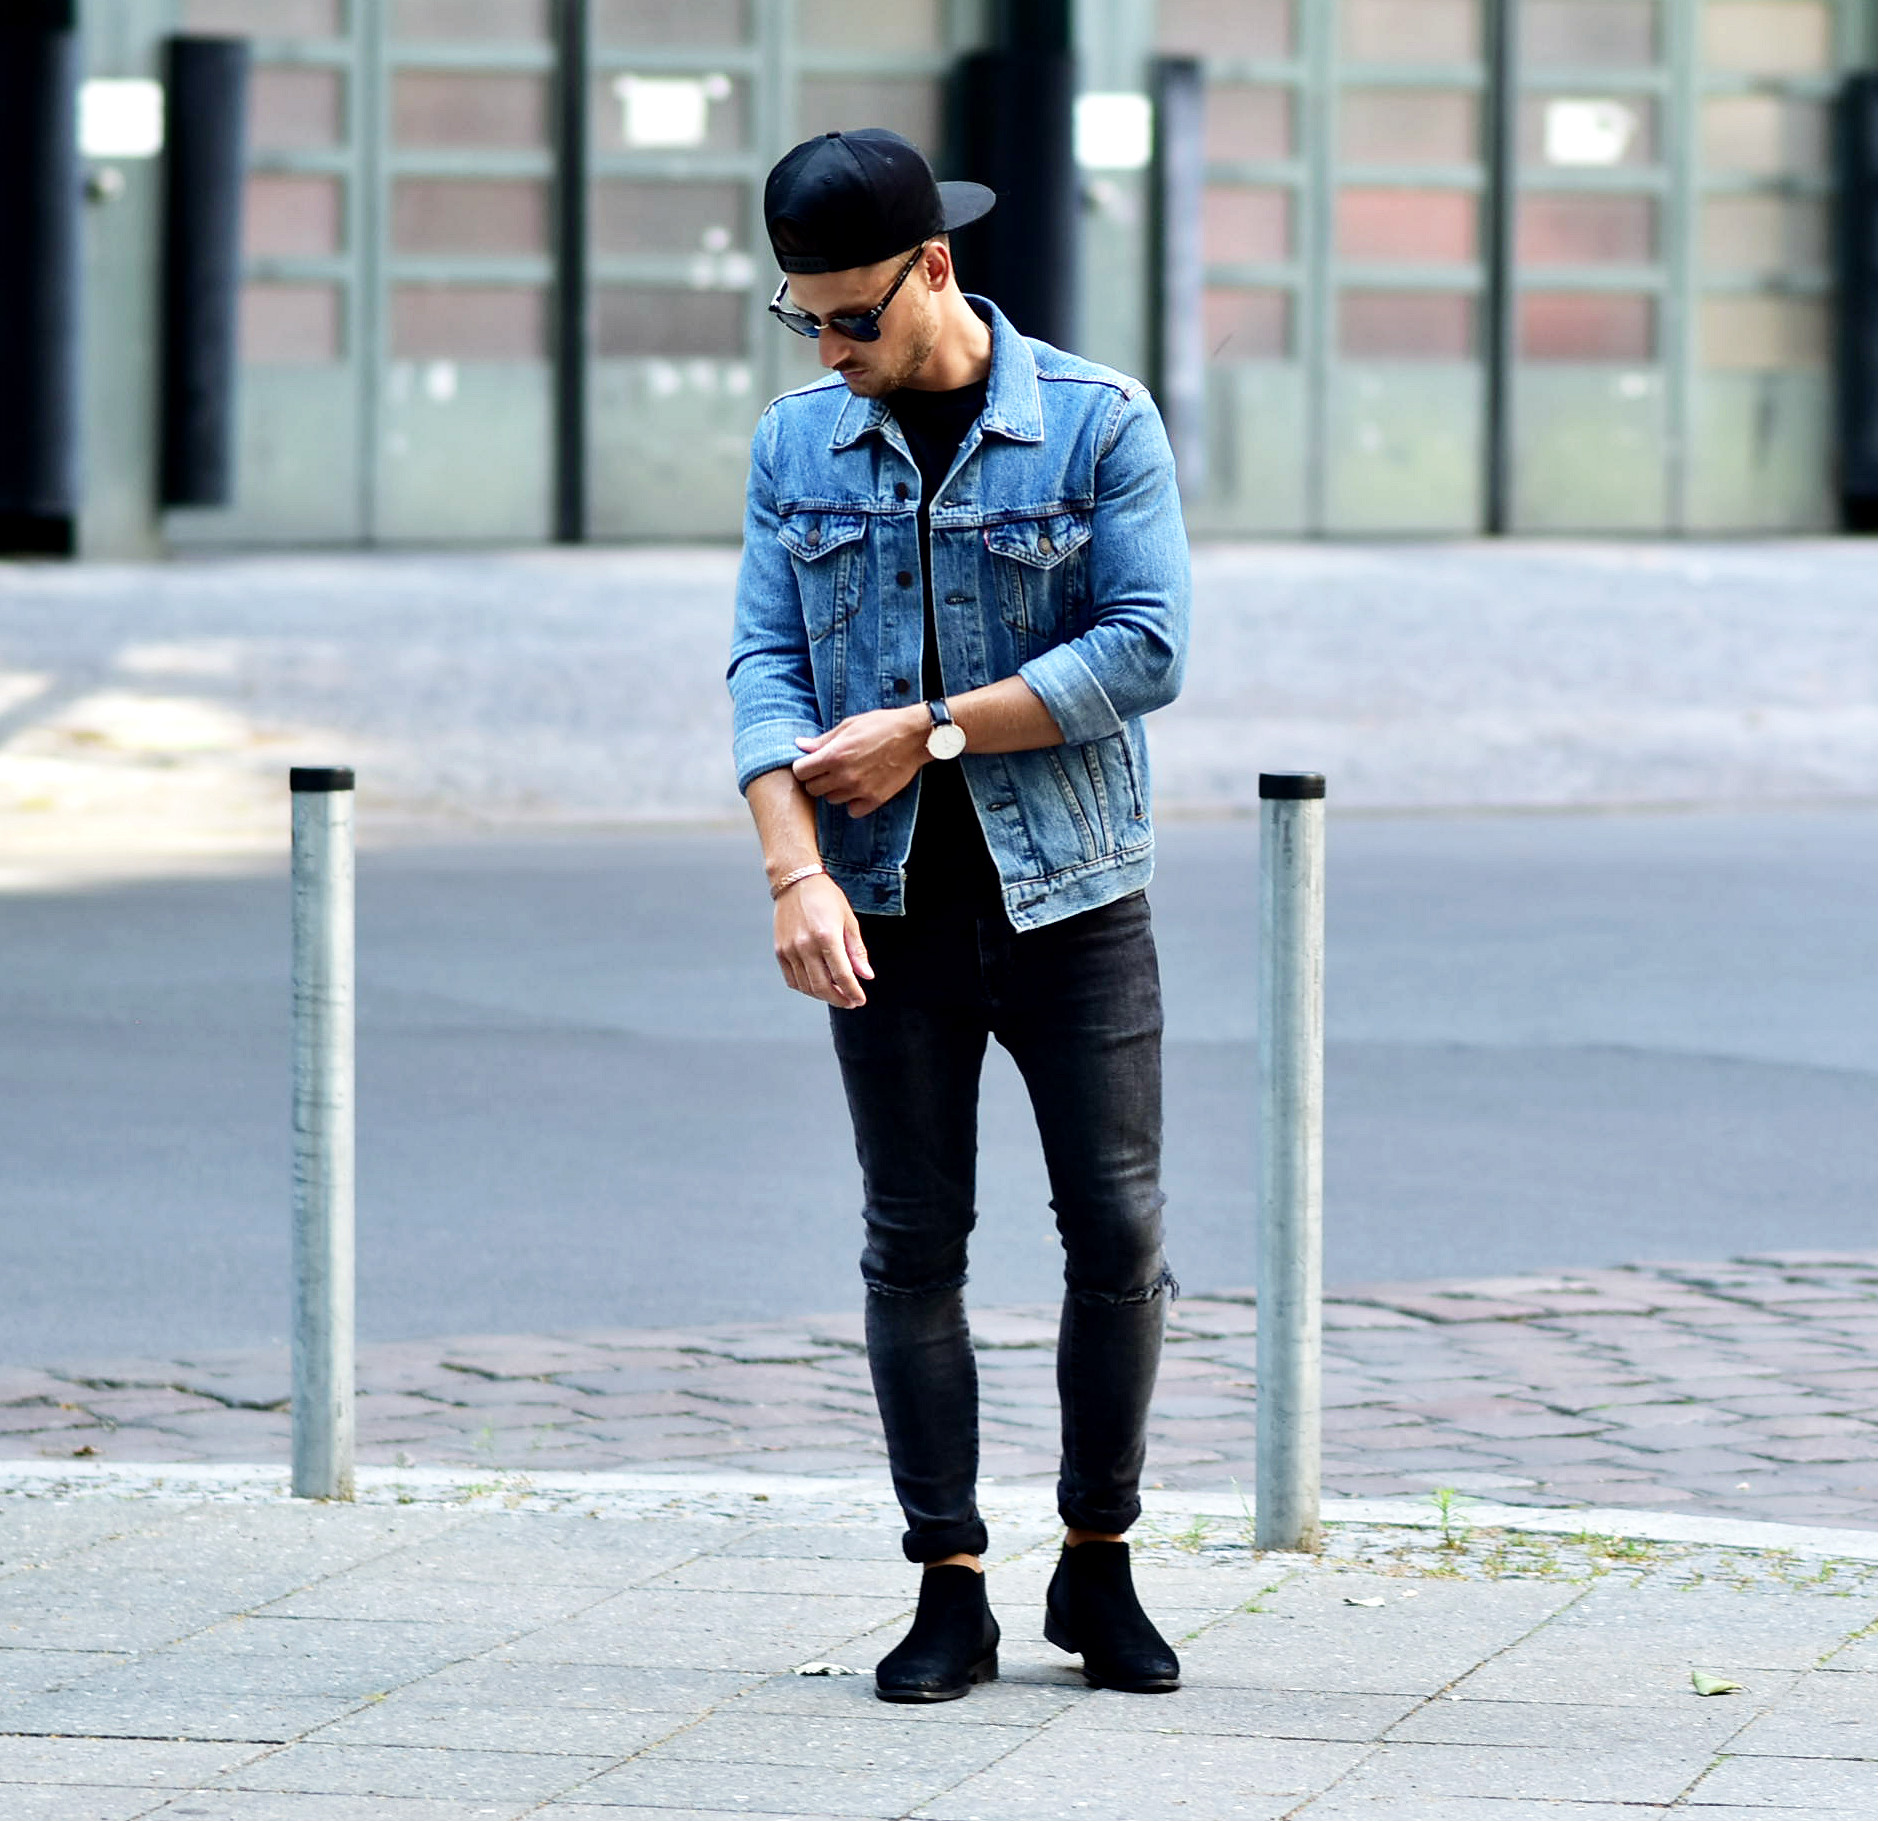 Tommeezjerry-Styleblog-Männerblog-Männer-Modeblog-Berlin-Berlinblog-Männermodeblog-Fashionblog-Outfit-Denim-Black-Look-Levis-Jeans-New-Era-Daniel-Wellington-Chelsea-Boots-Triwa